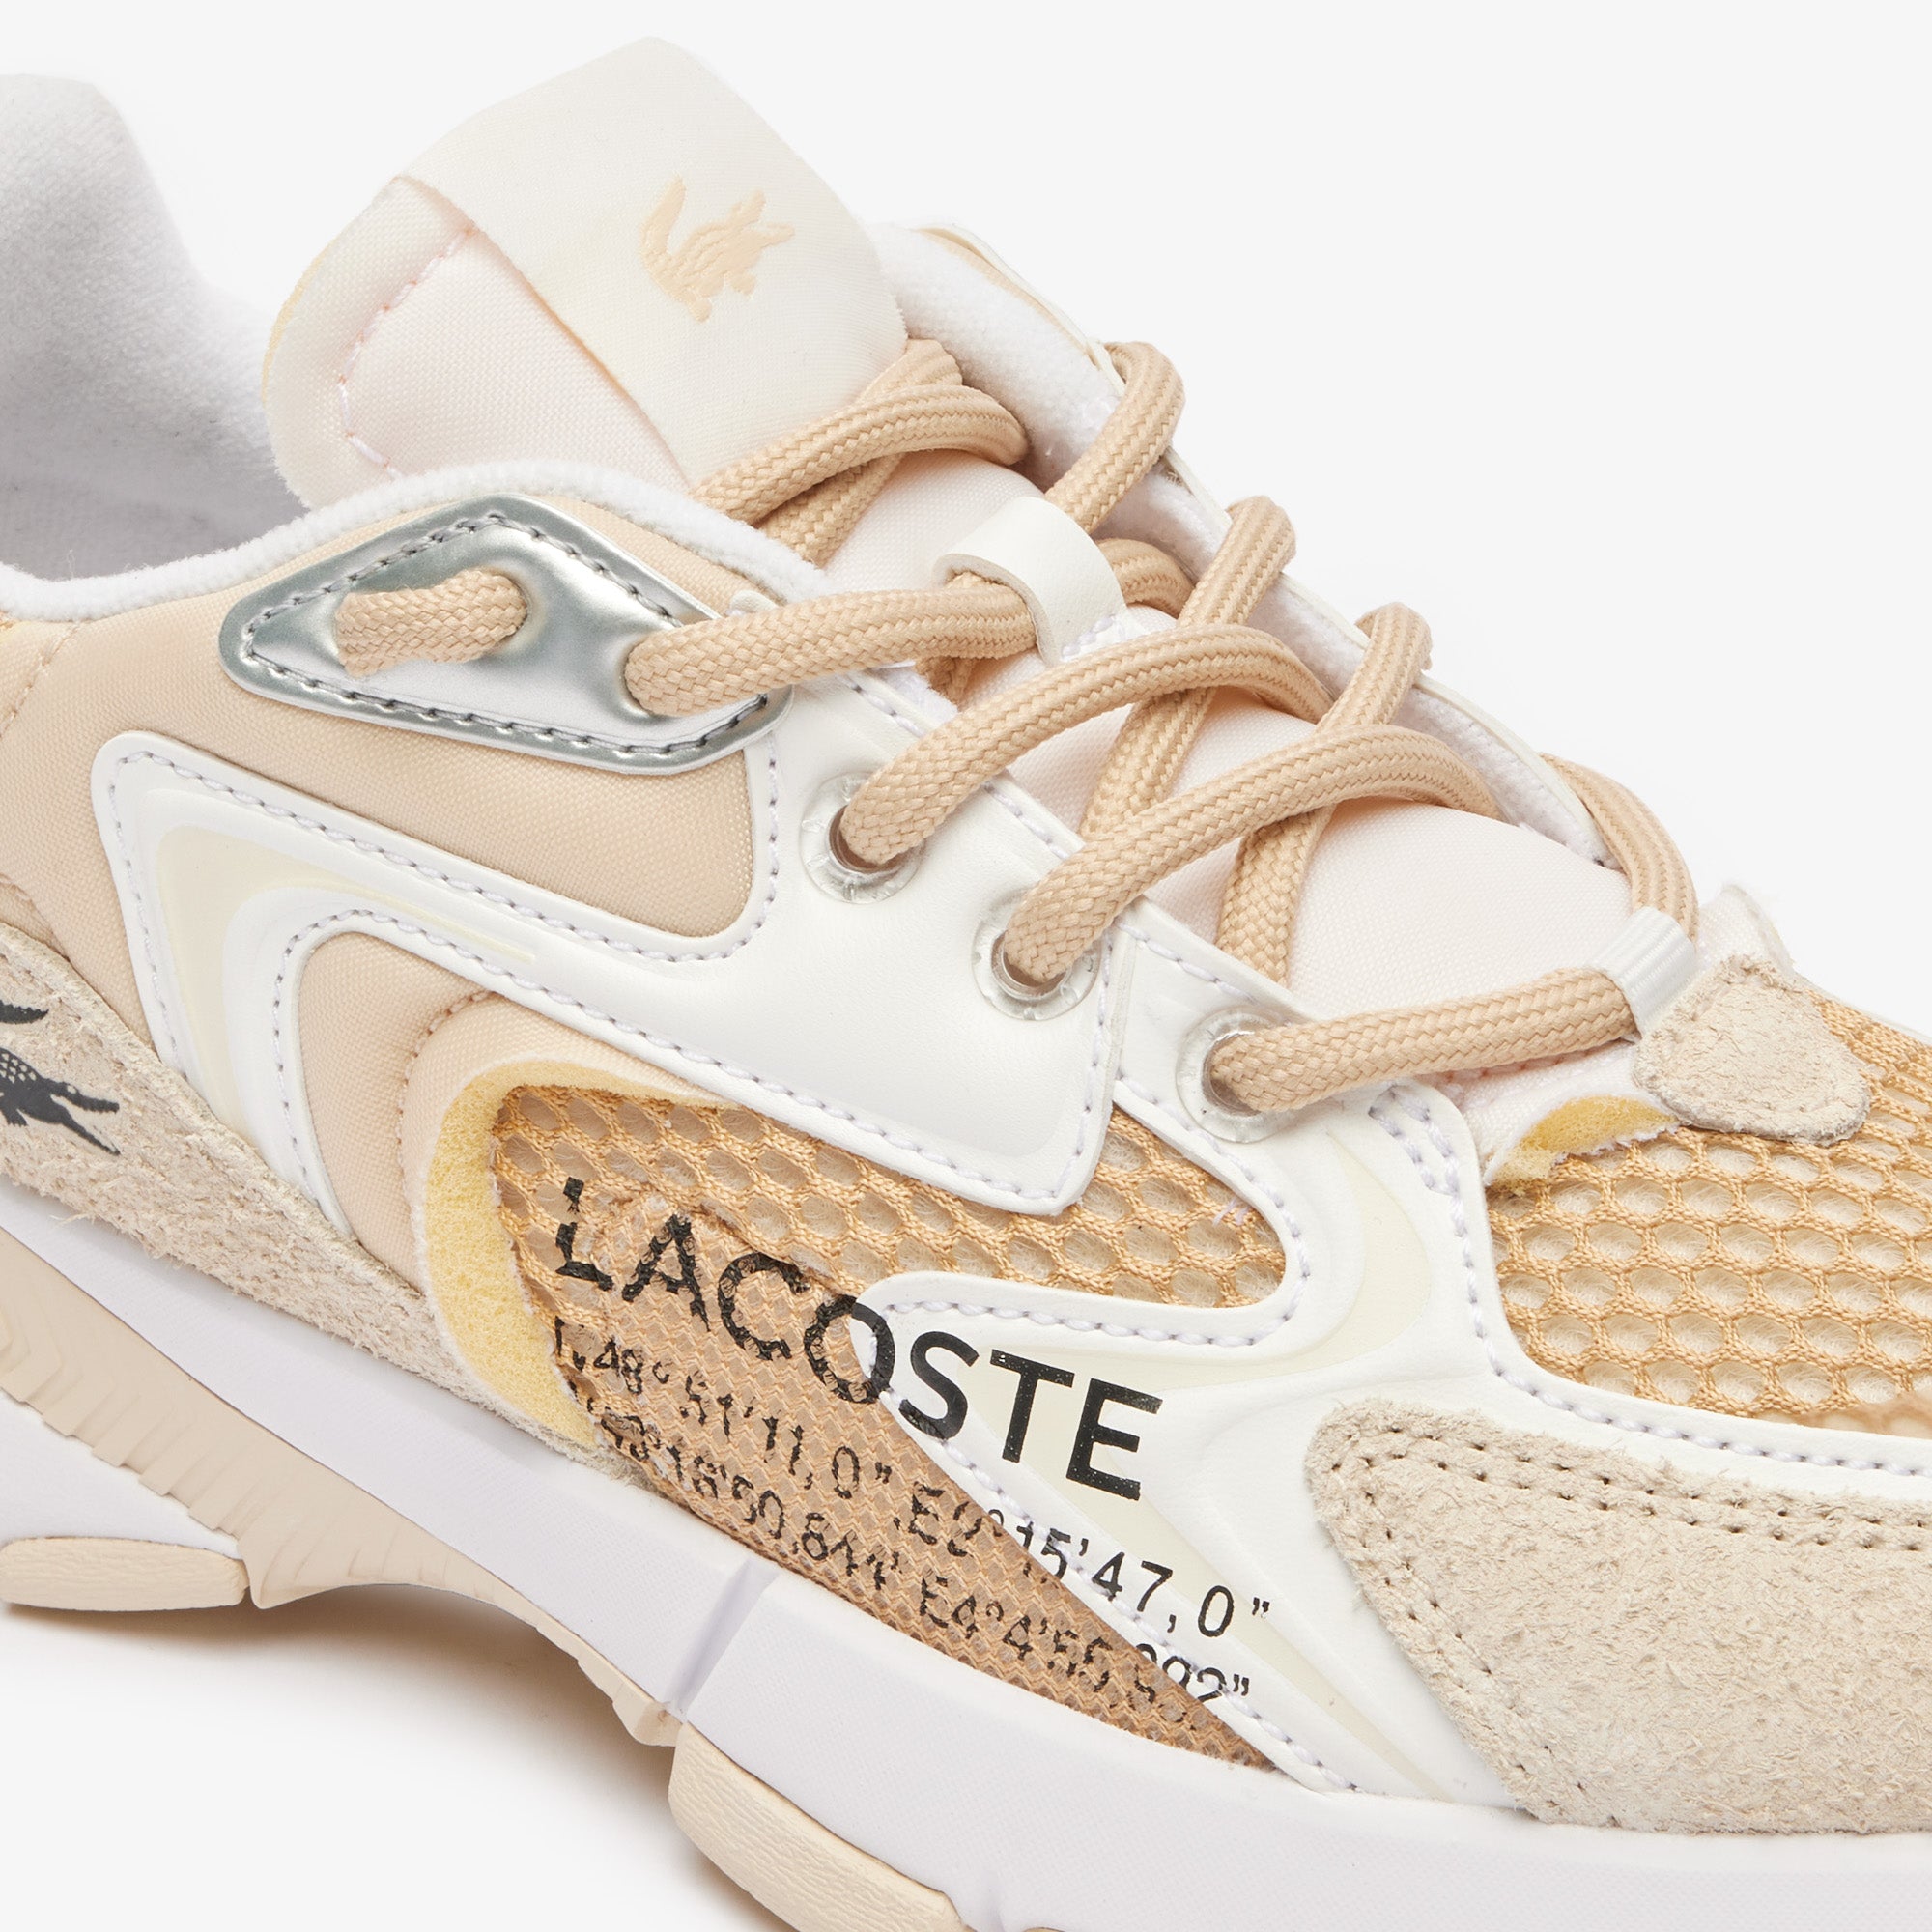 Lacoste - L003 Neo 124 5 Sneaker - Light Tan/White